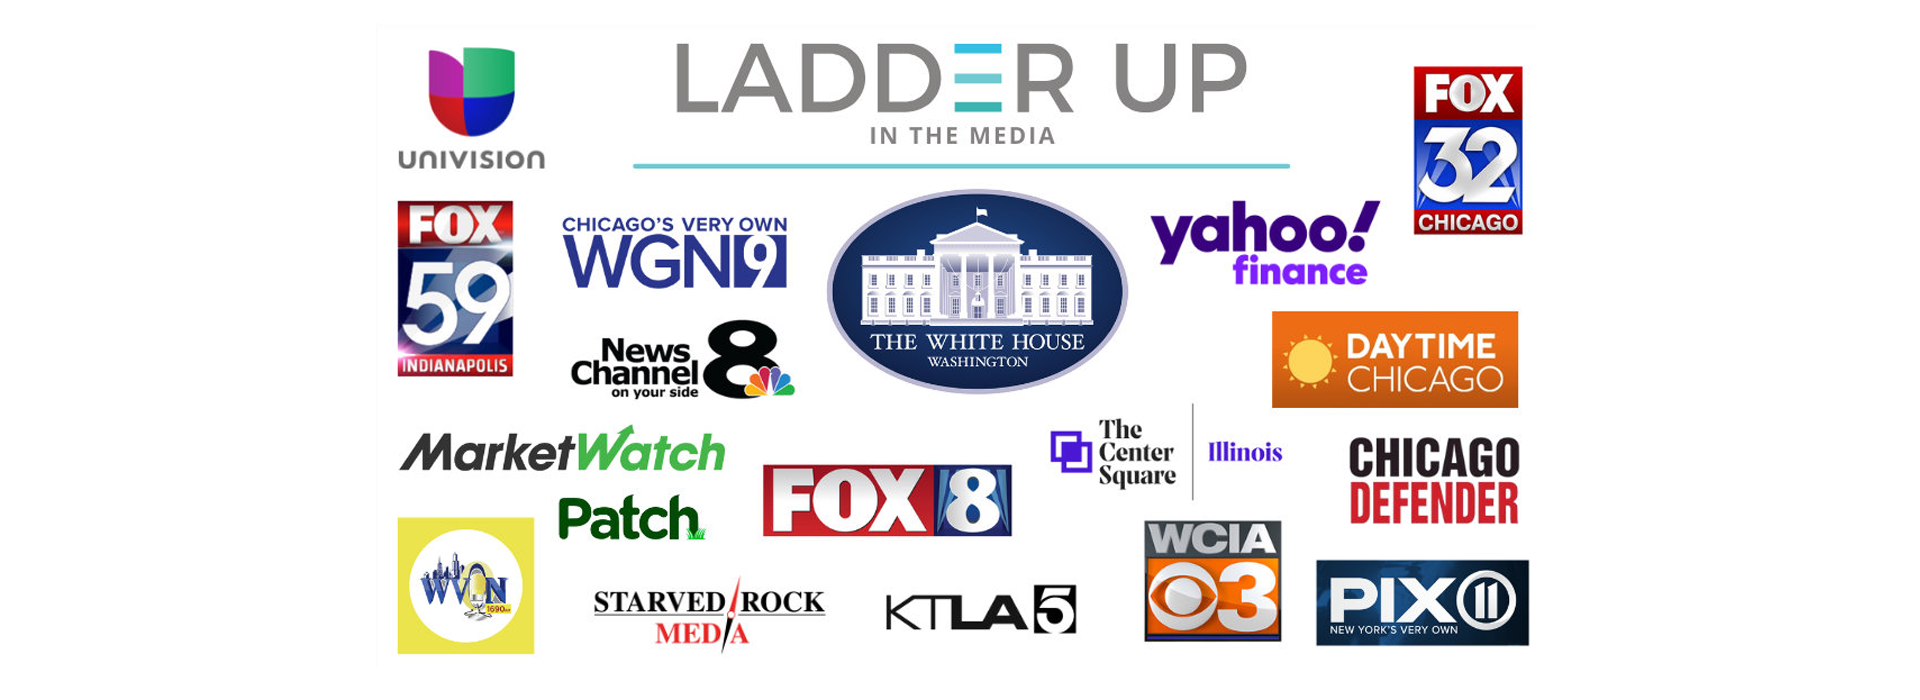 ladder-up-in-the-media-banner